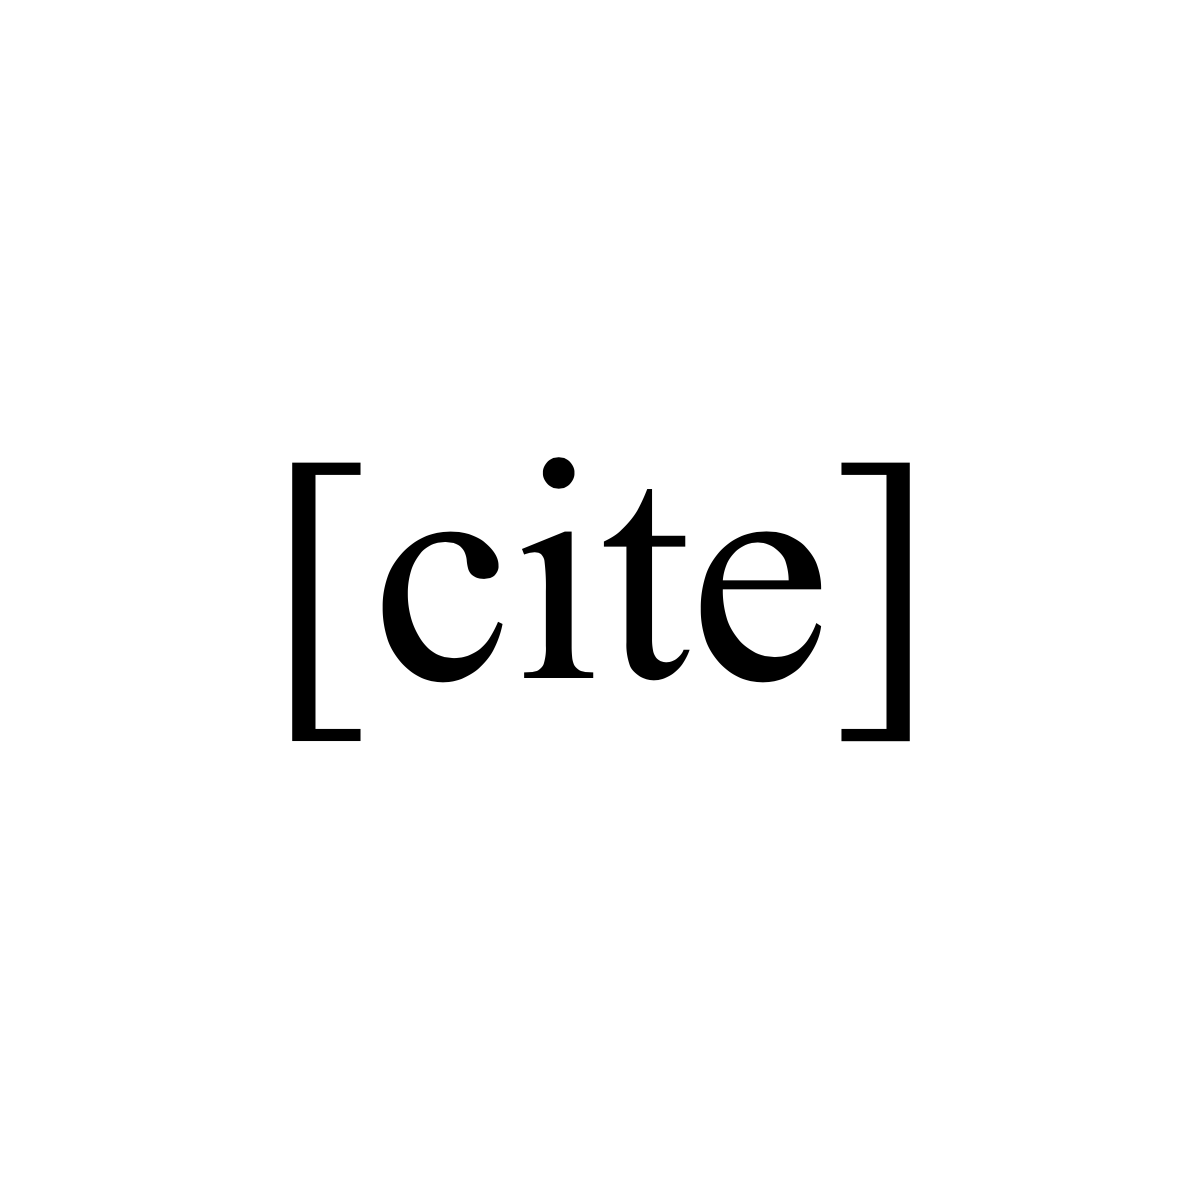 Citation-(-CITE-)-token-logo